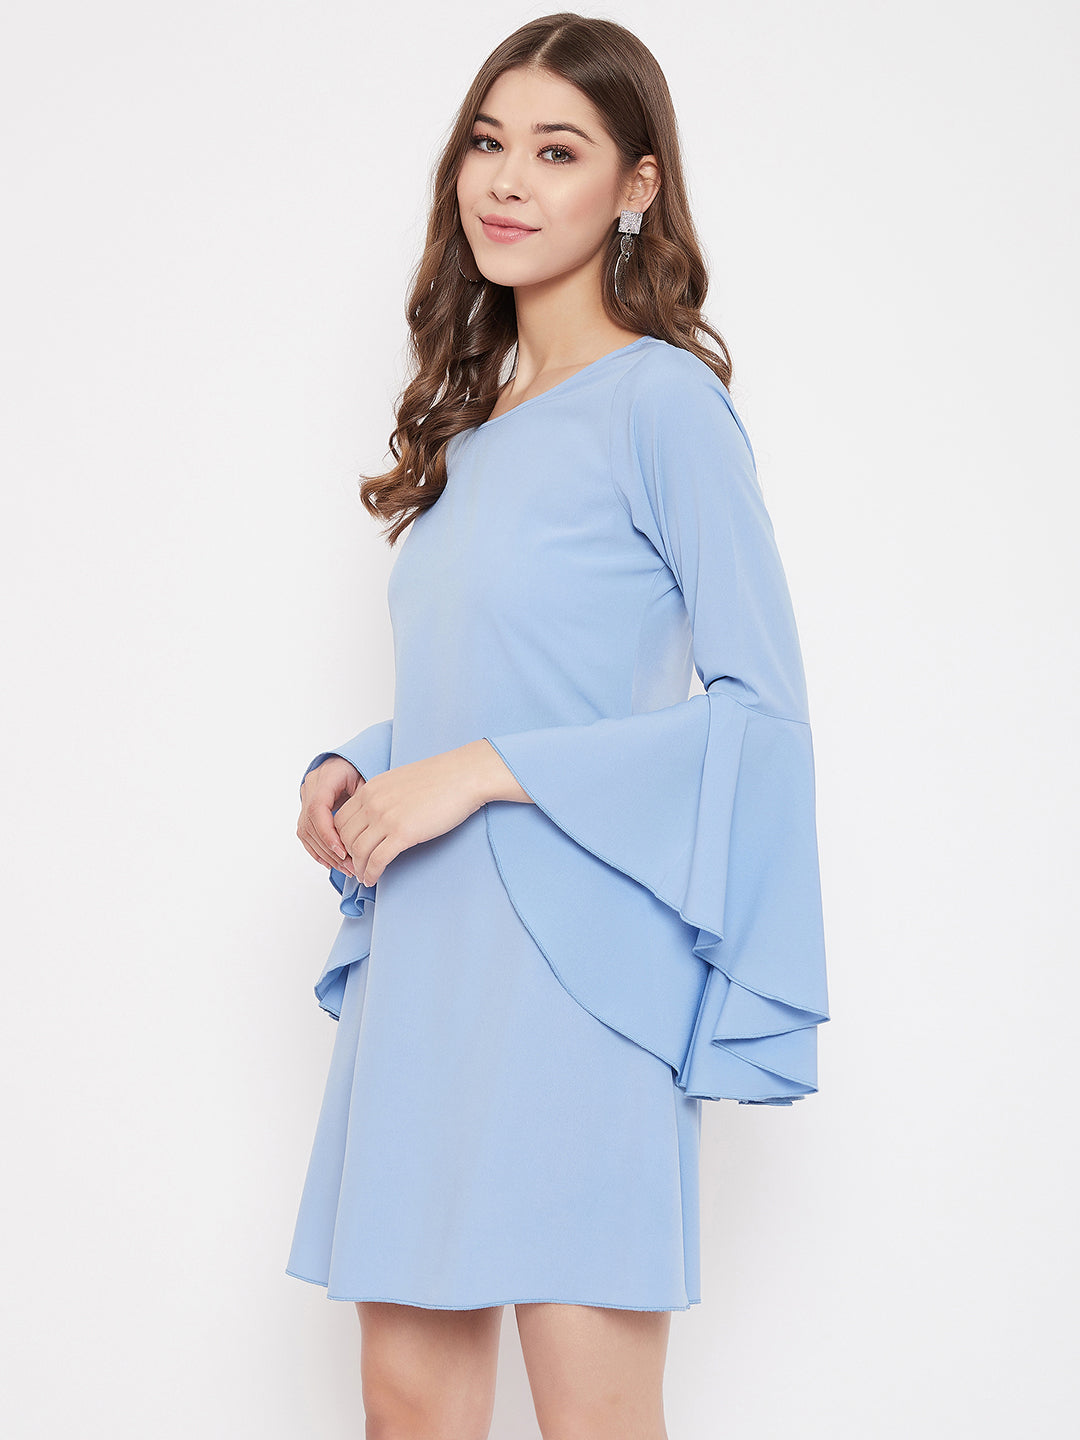 Berrylush Women Solid Blue Round Neck Bell Sleeve A-Line Mini Dress